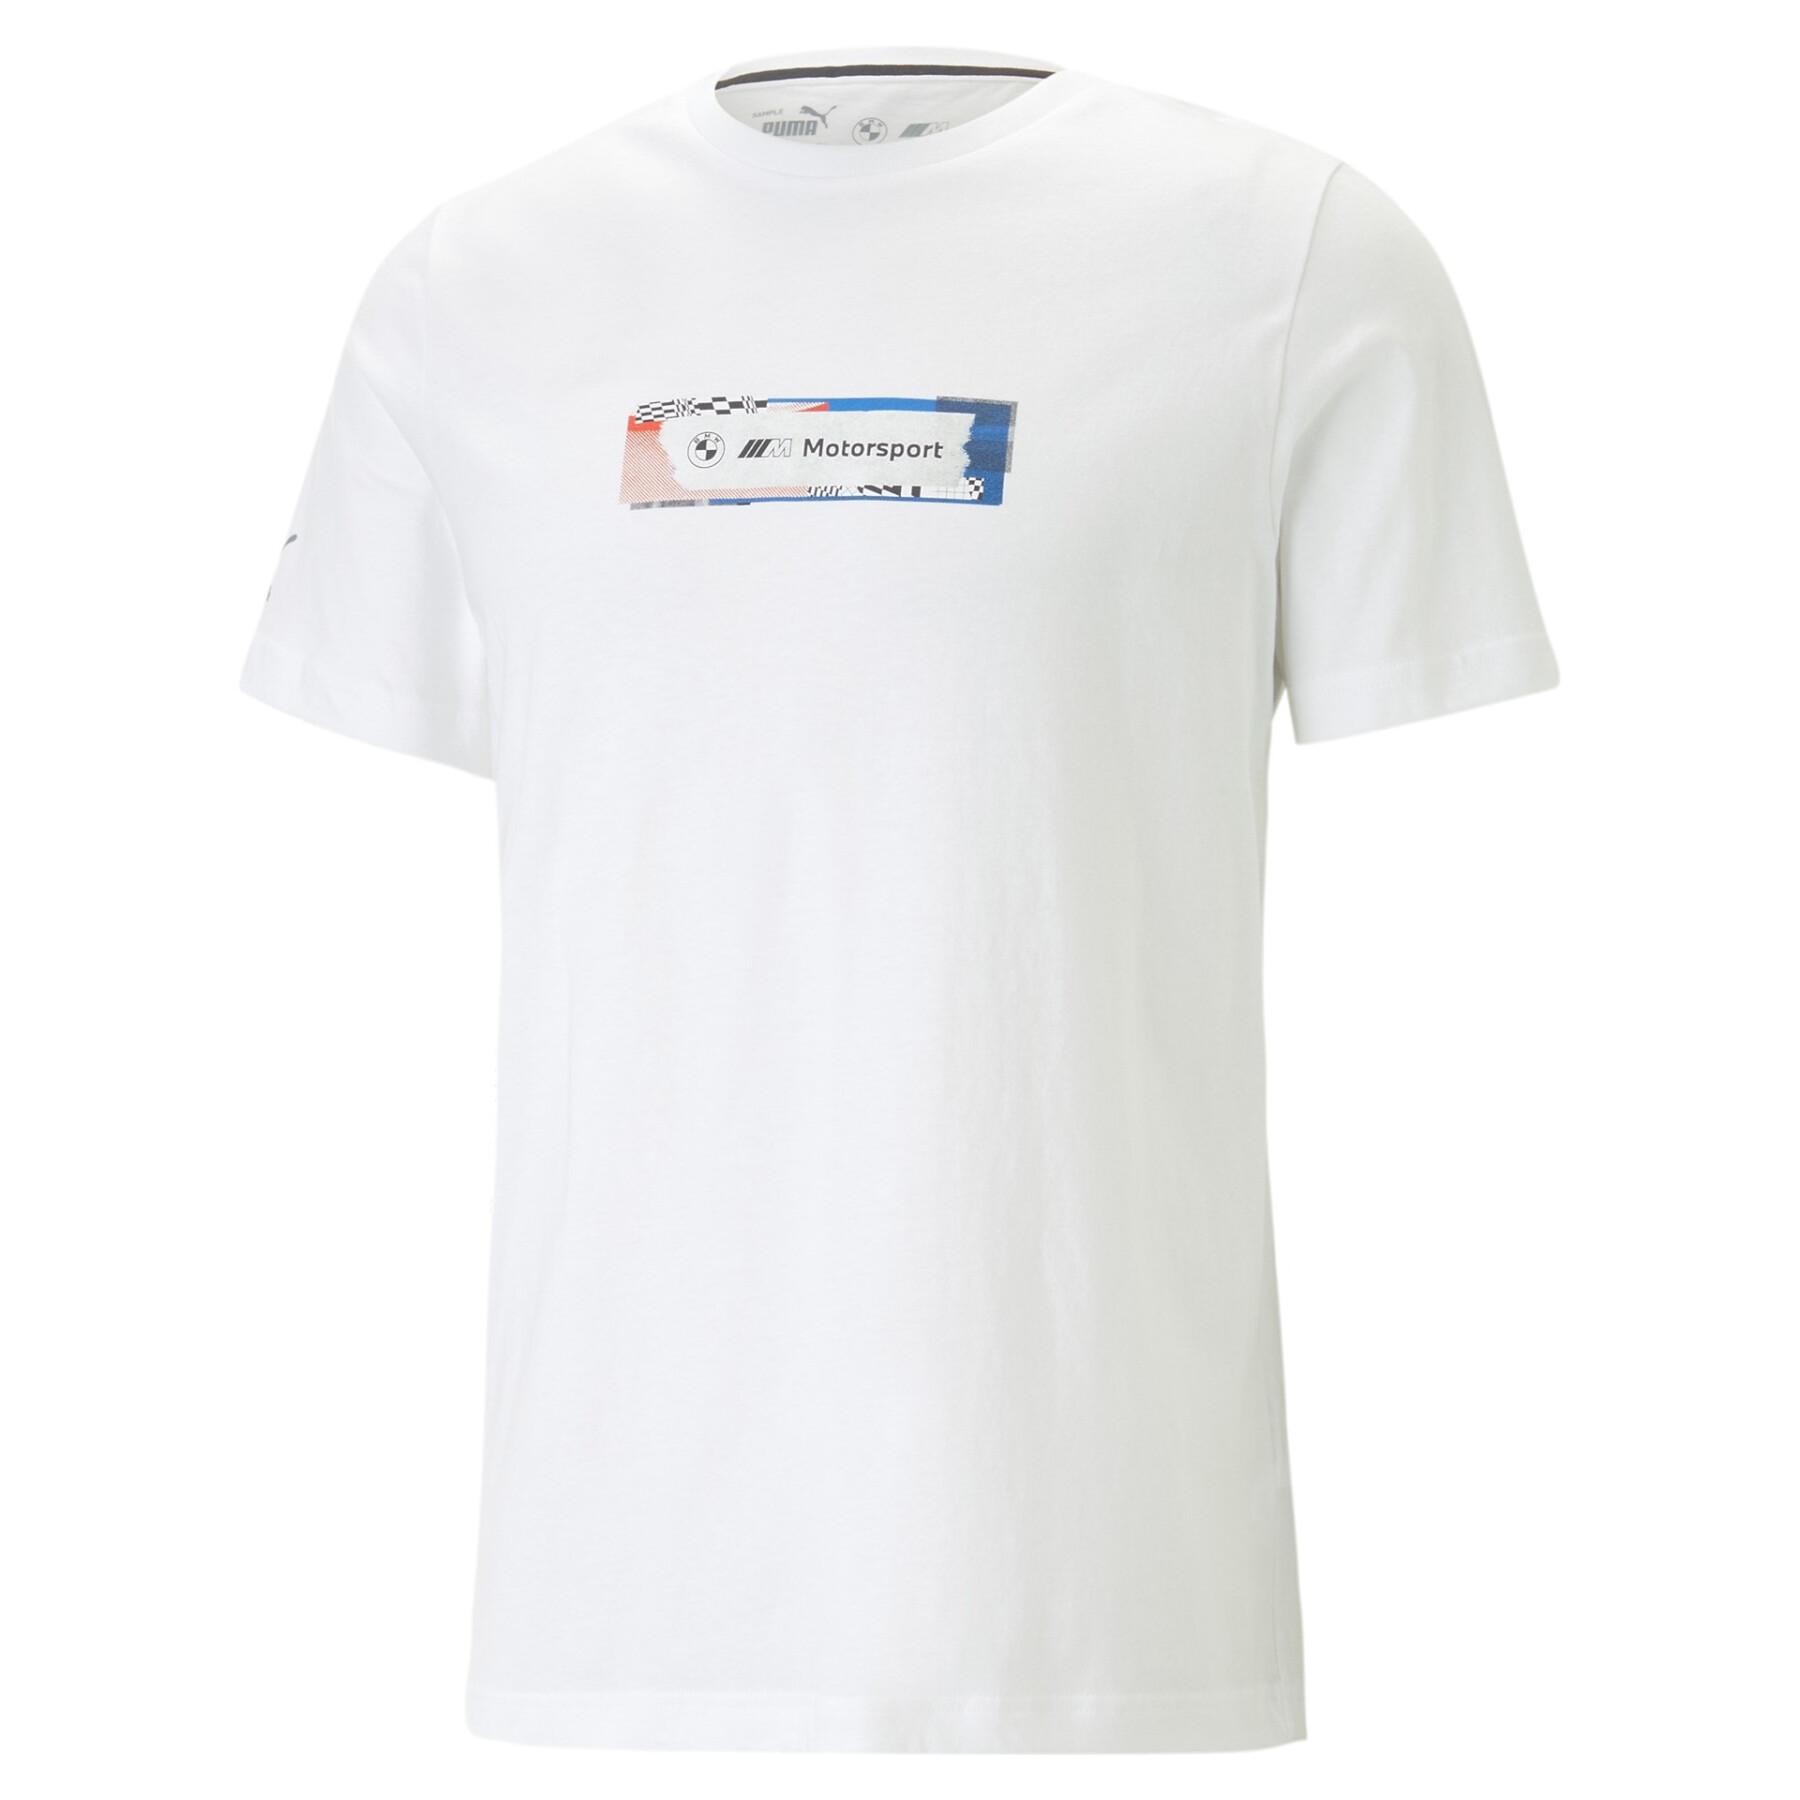 T-shirt bmw motosport logo - T-shirts - Lifestyle Male - Lifestyle